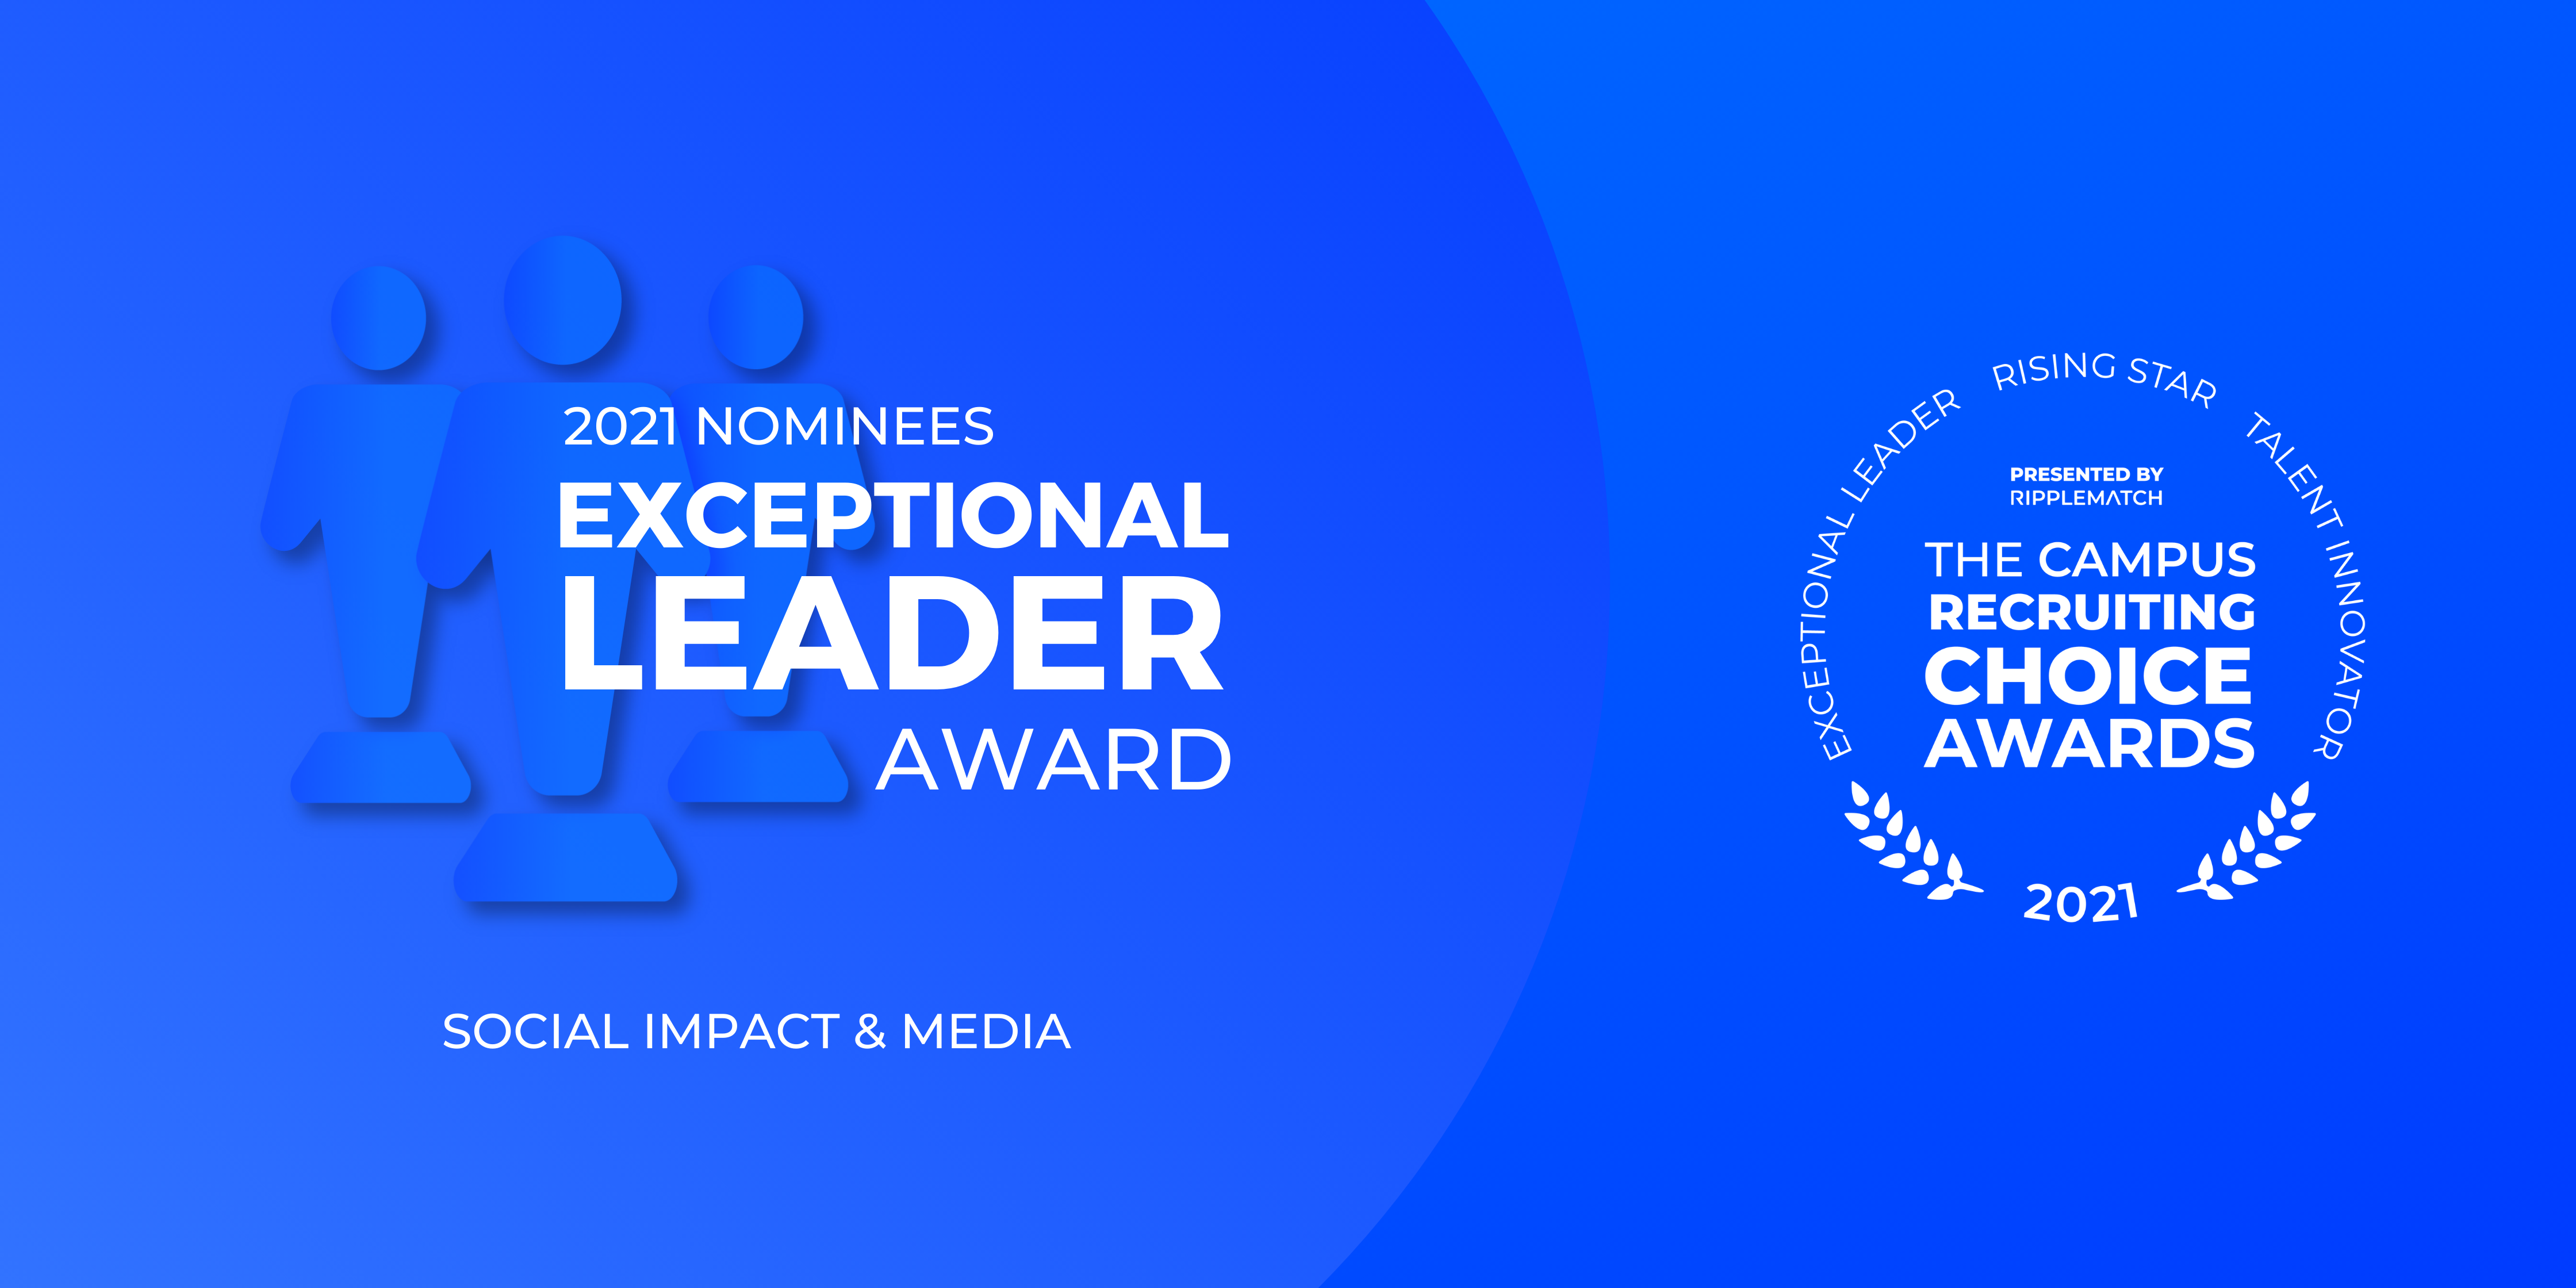 Exceptional Leader Award - Social Impact & Media